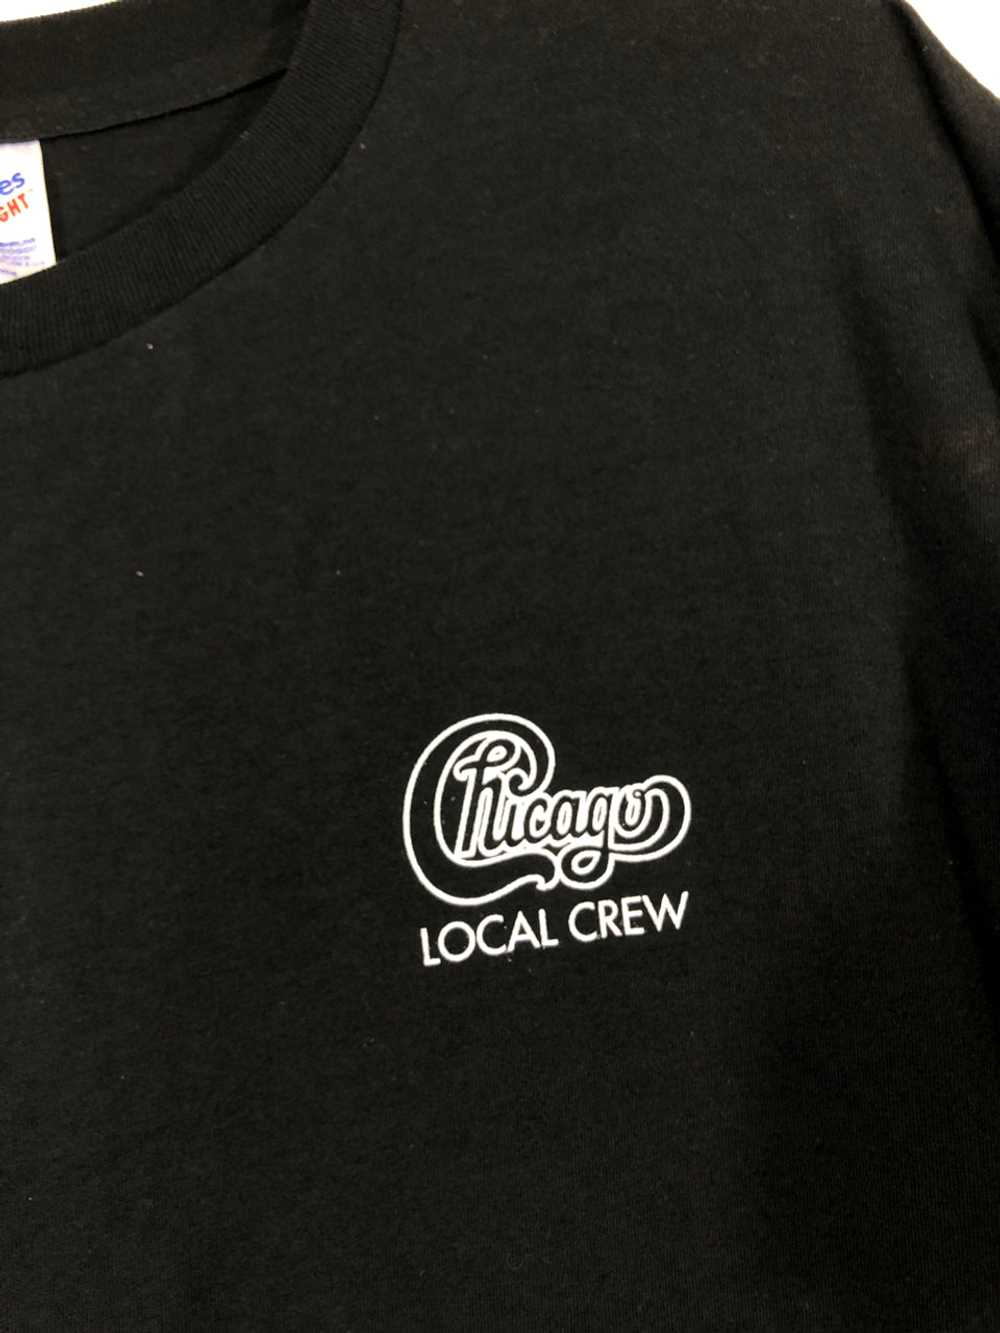 Chicago Local Crew Tour T-Shirt - image 2